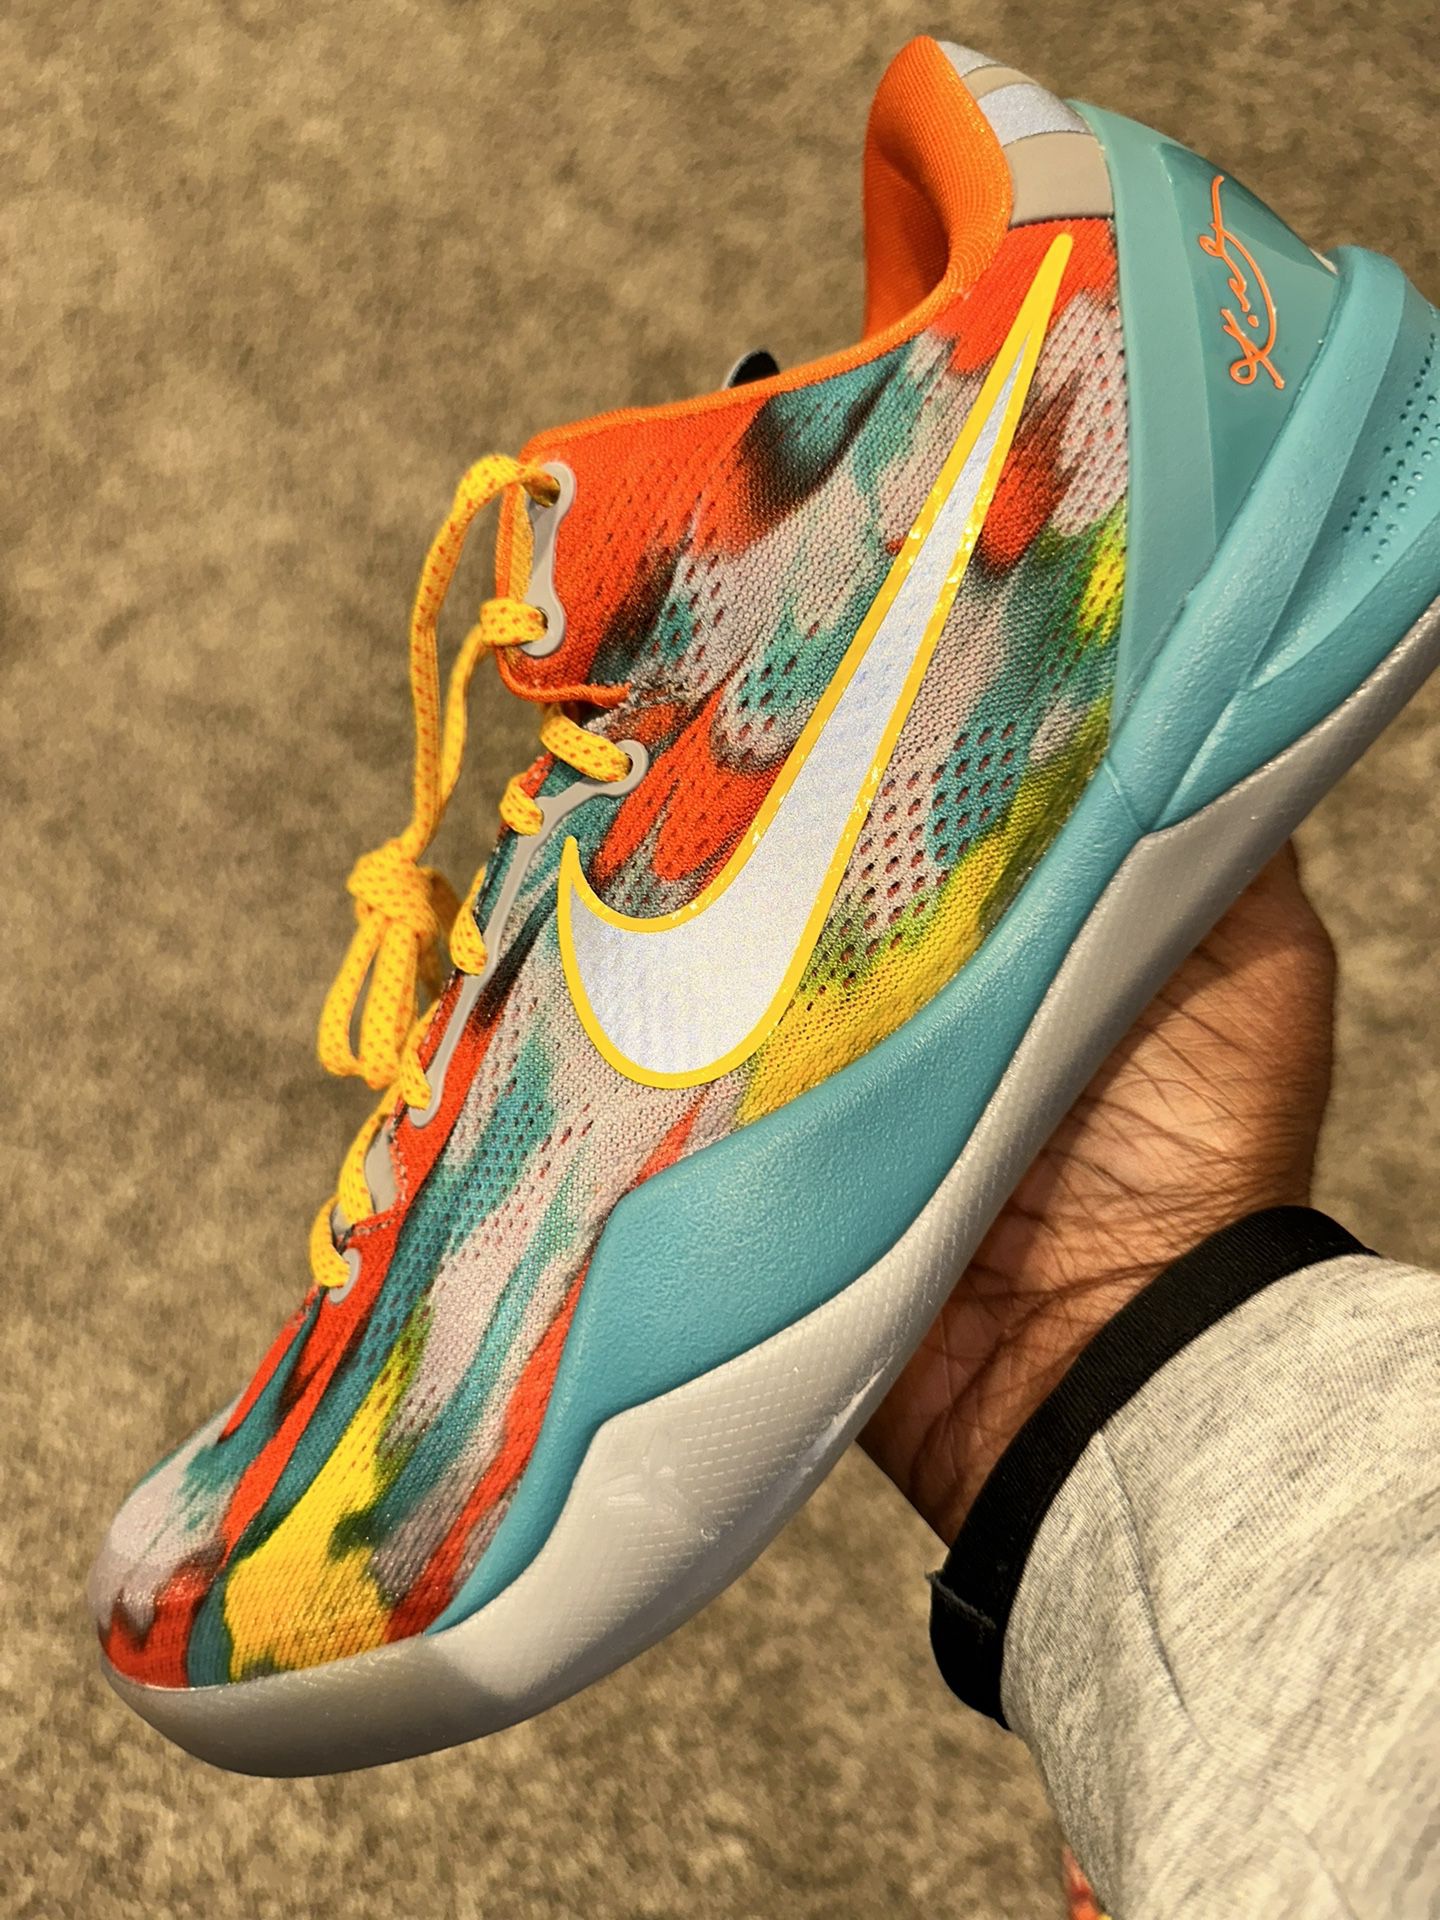 Nike Kobe 8 Venice Size 9,9.5,10